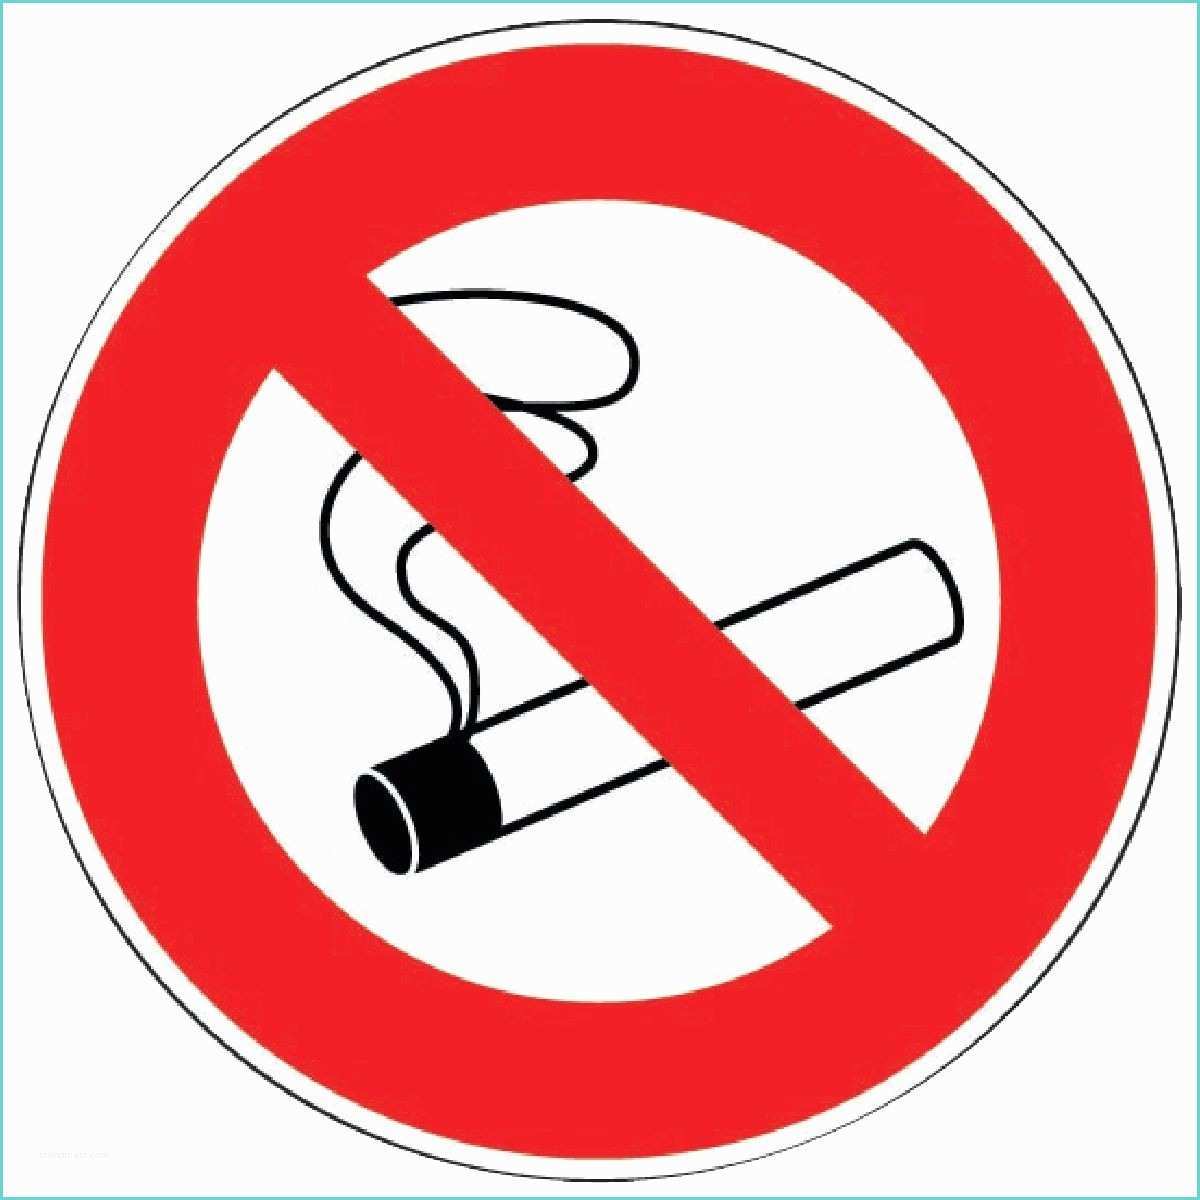 Interdiction De Fumer Image Logo Interdiction De Fumer Gratuit à Imprimer